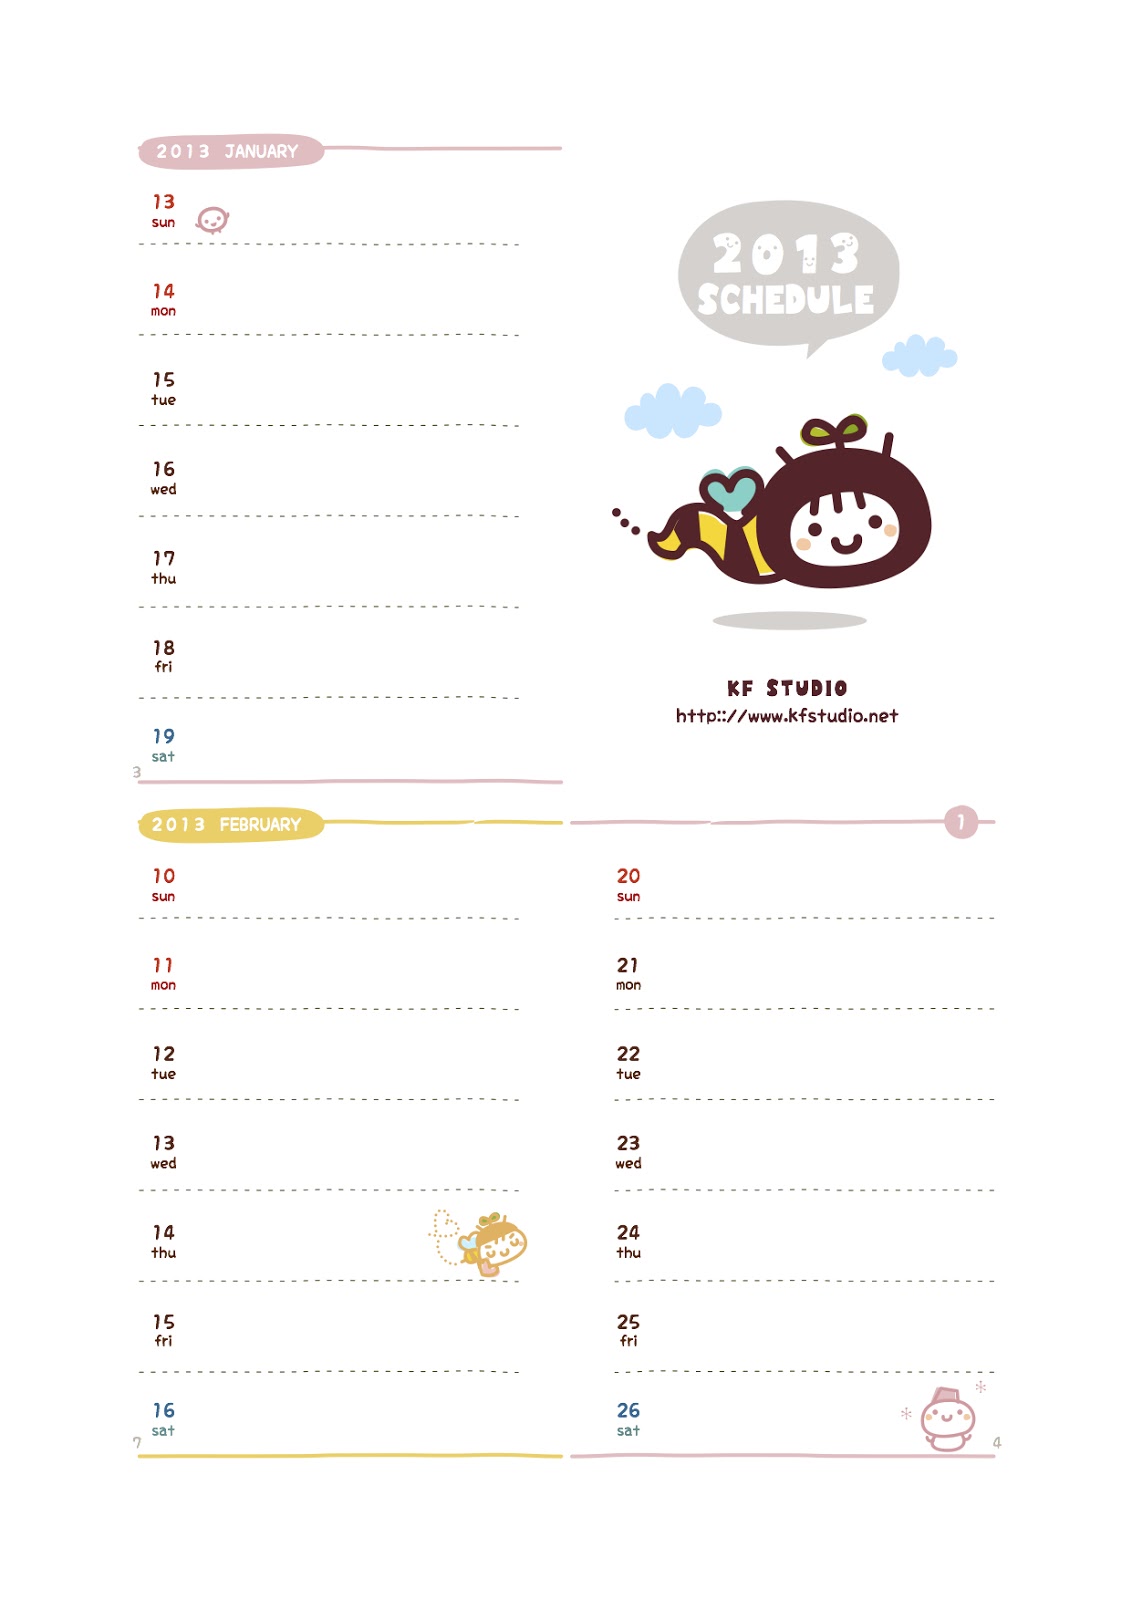 2013 Schedule & Planner ขนาดกระดาษ A6